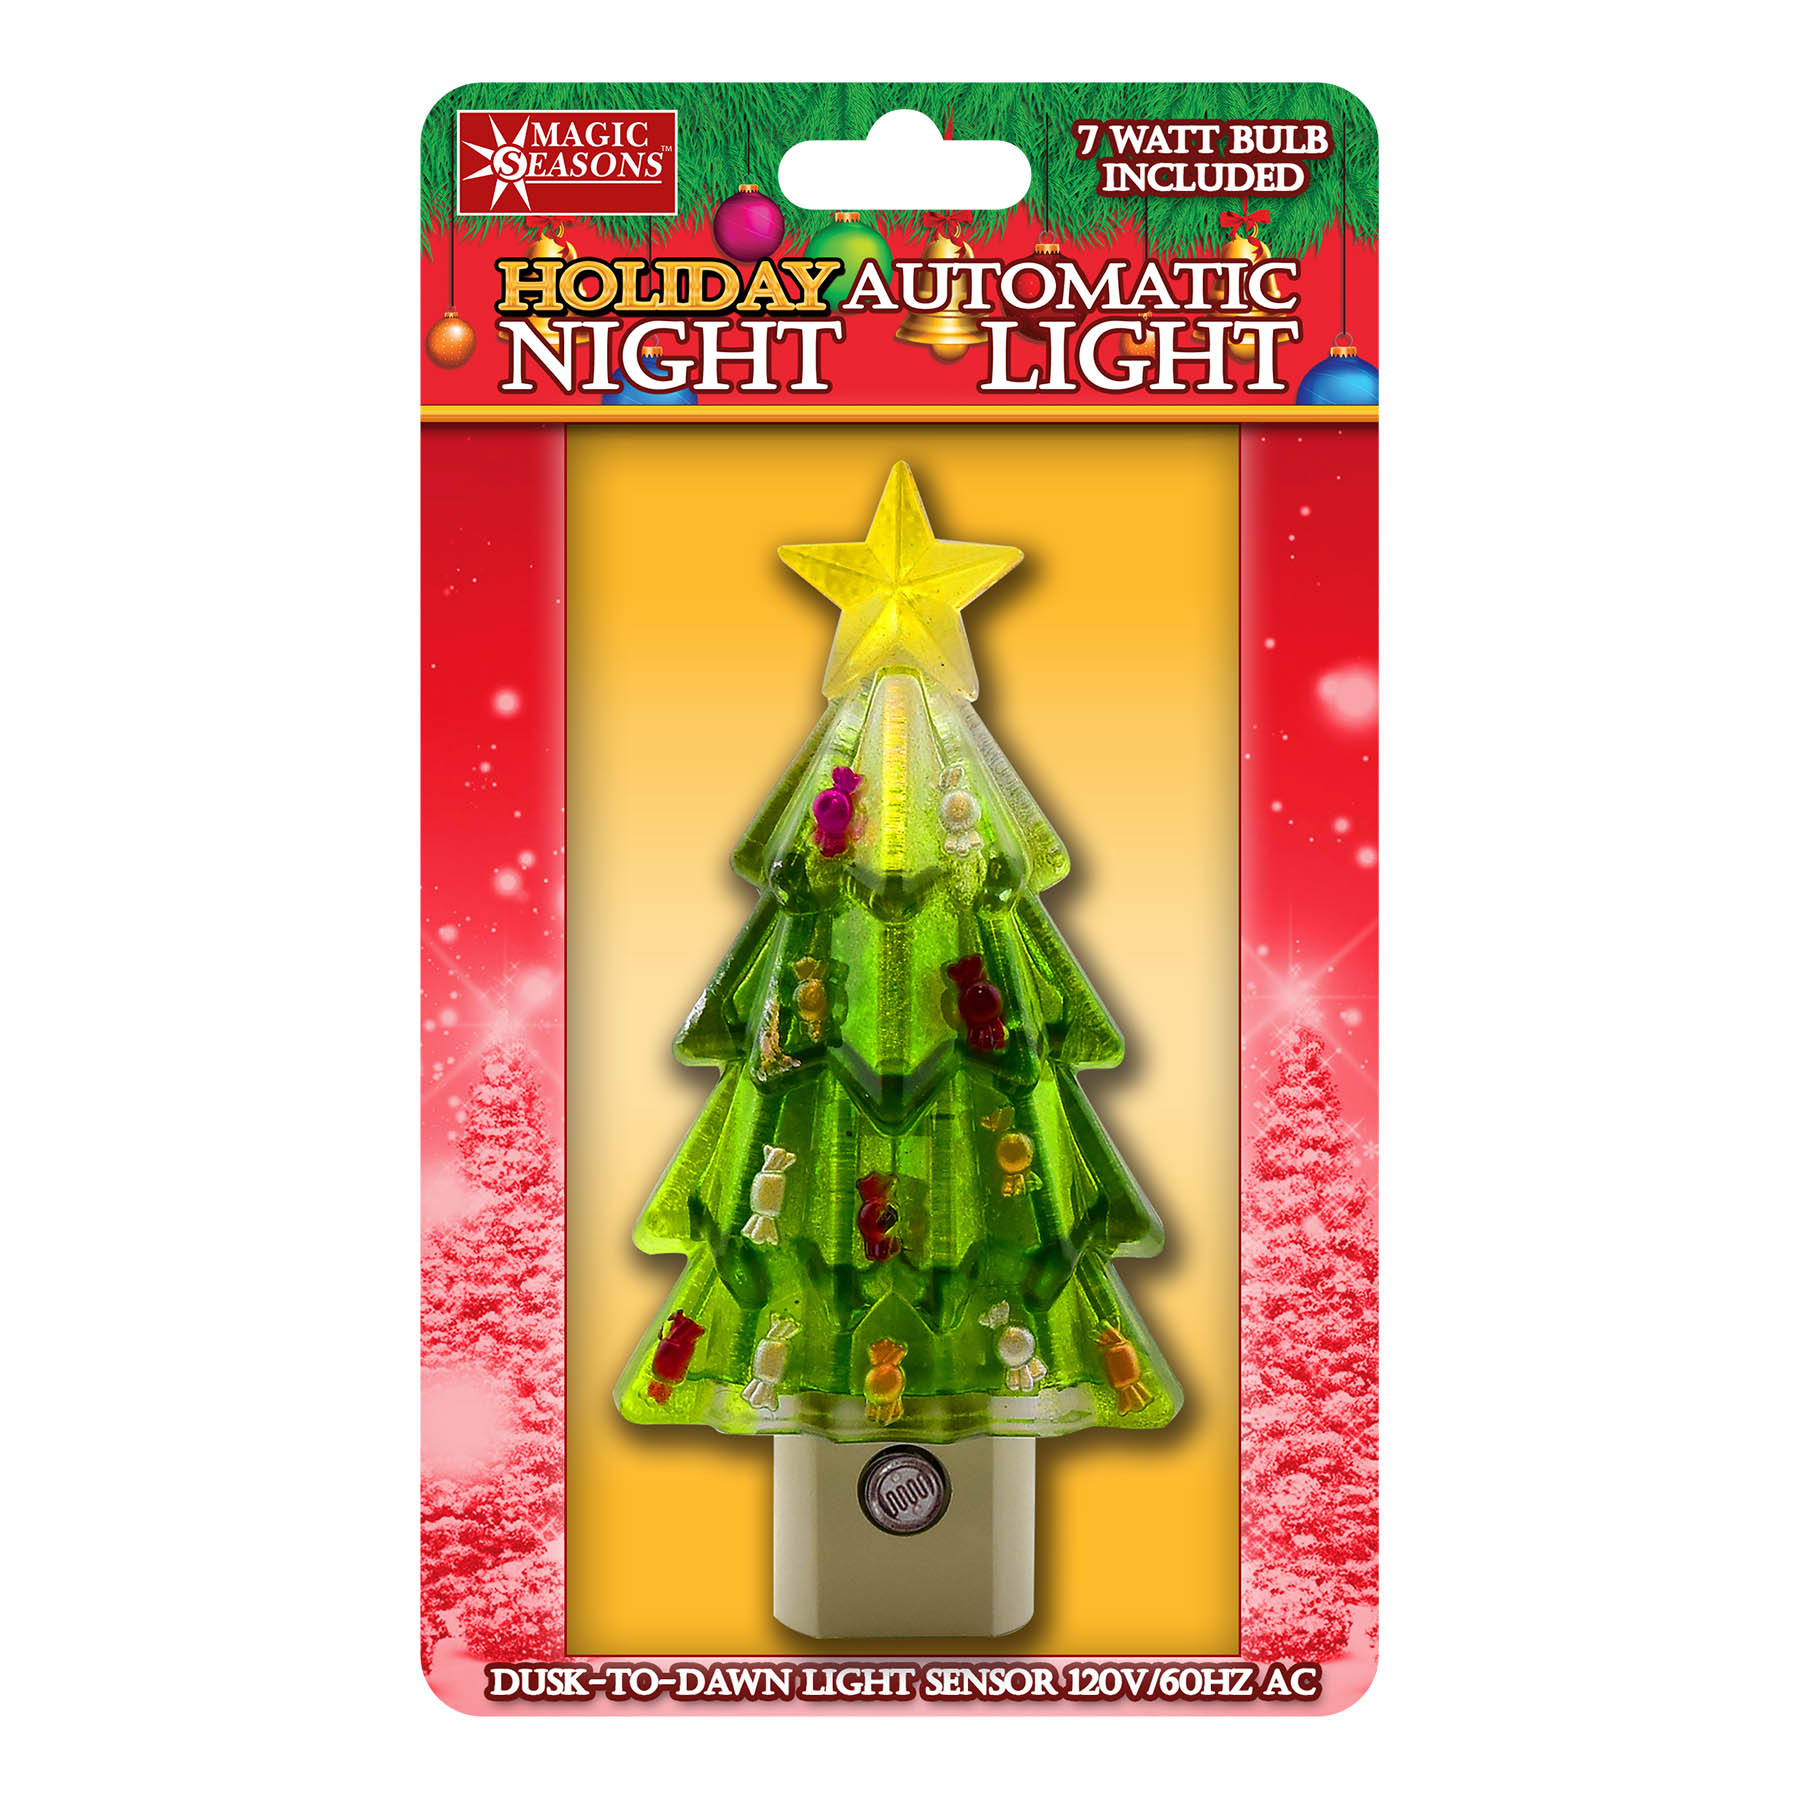 Shawshank LEDz - All Products - Christmas Night light